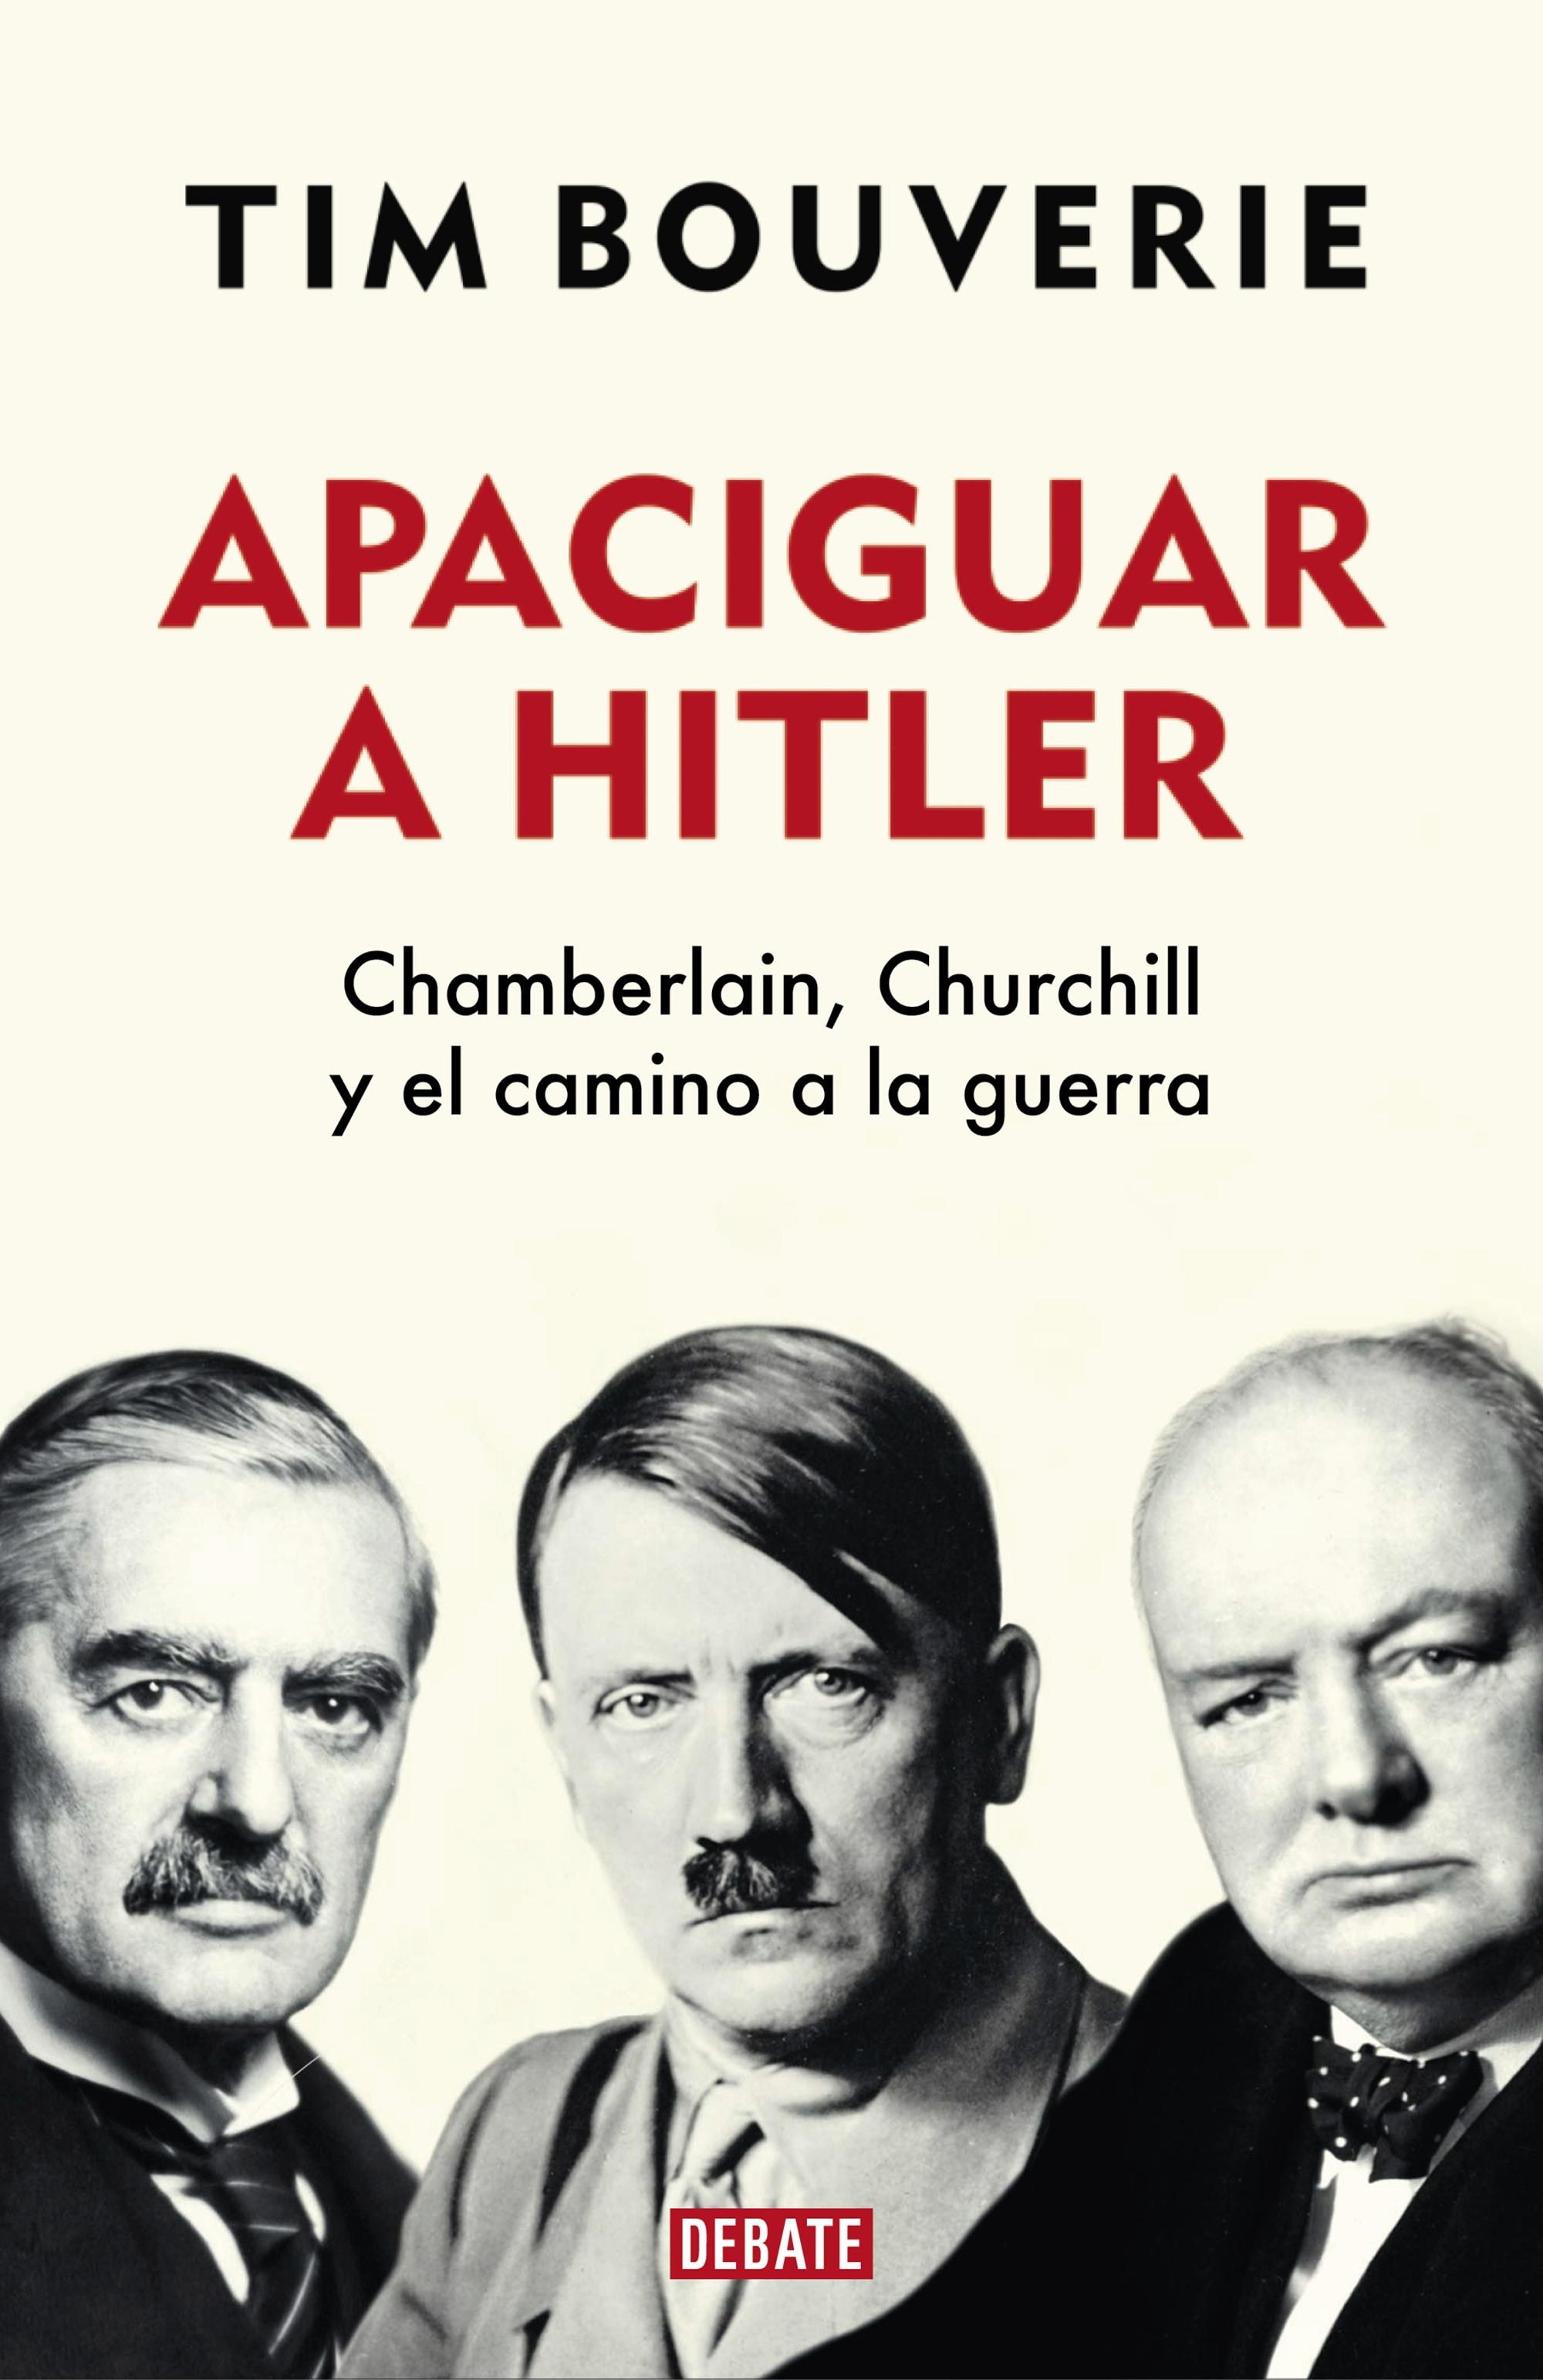 Apaciguar a Hitler "Chamberlain, Churchill y el camino de la guerra"